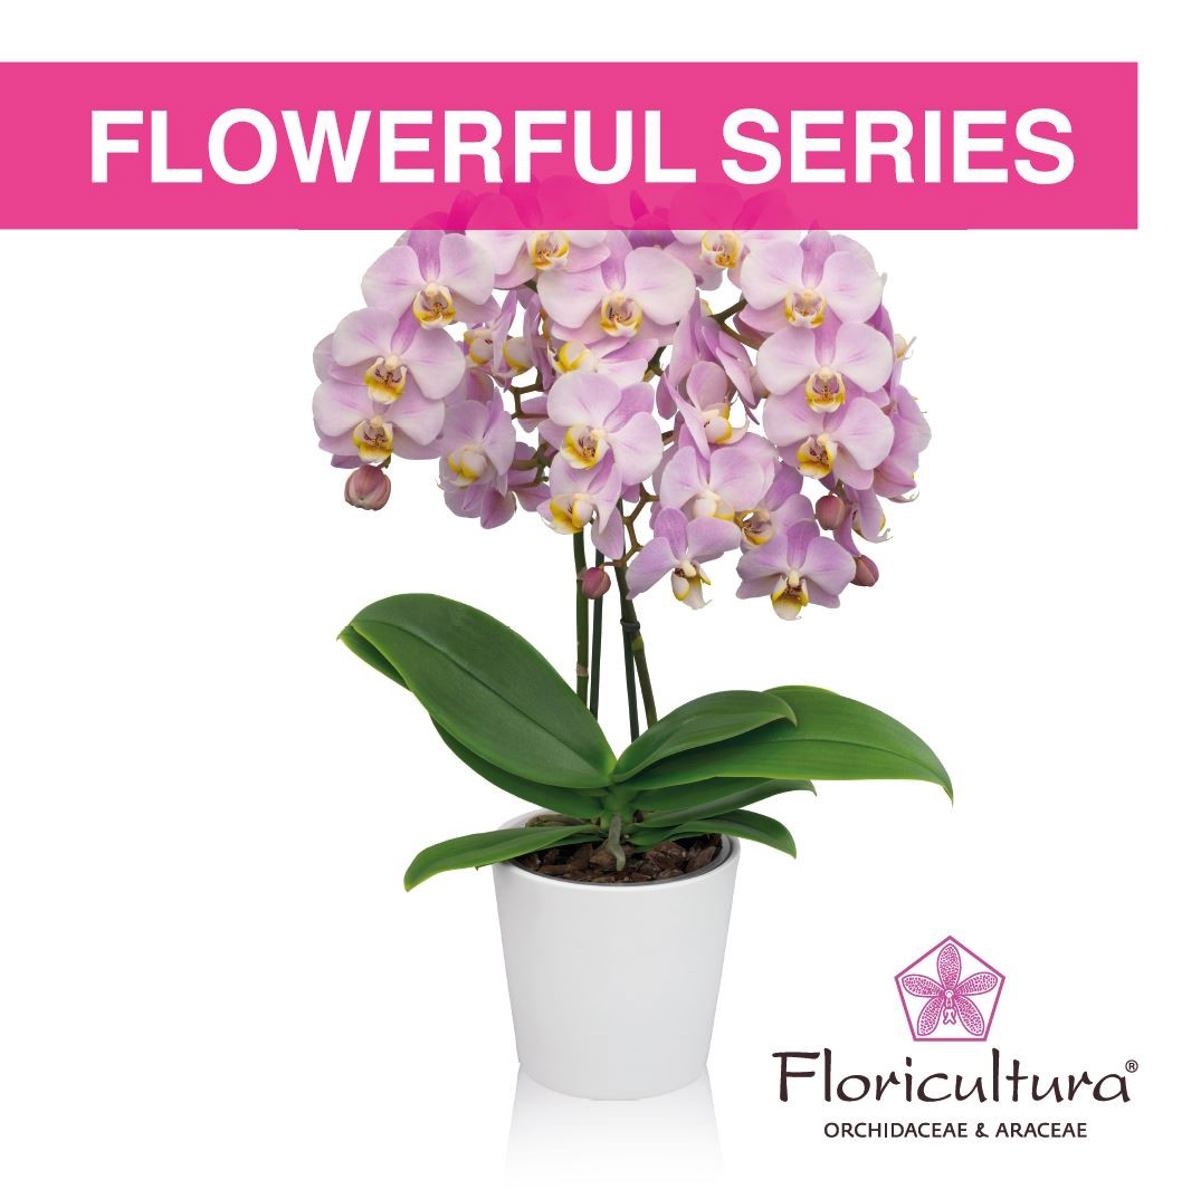 Floricultura introduceert de Phalaenopsis Flowerful serie